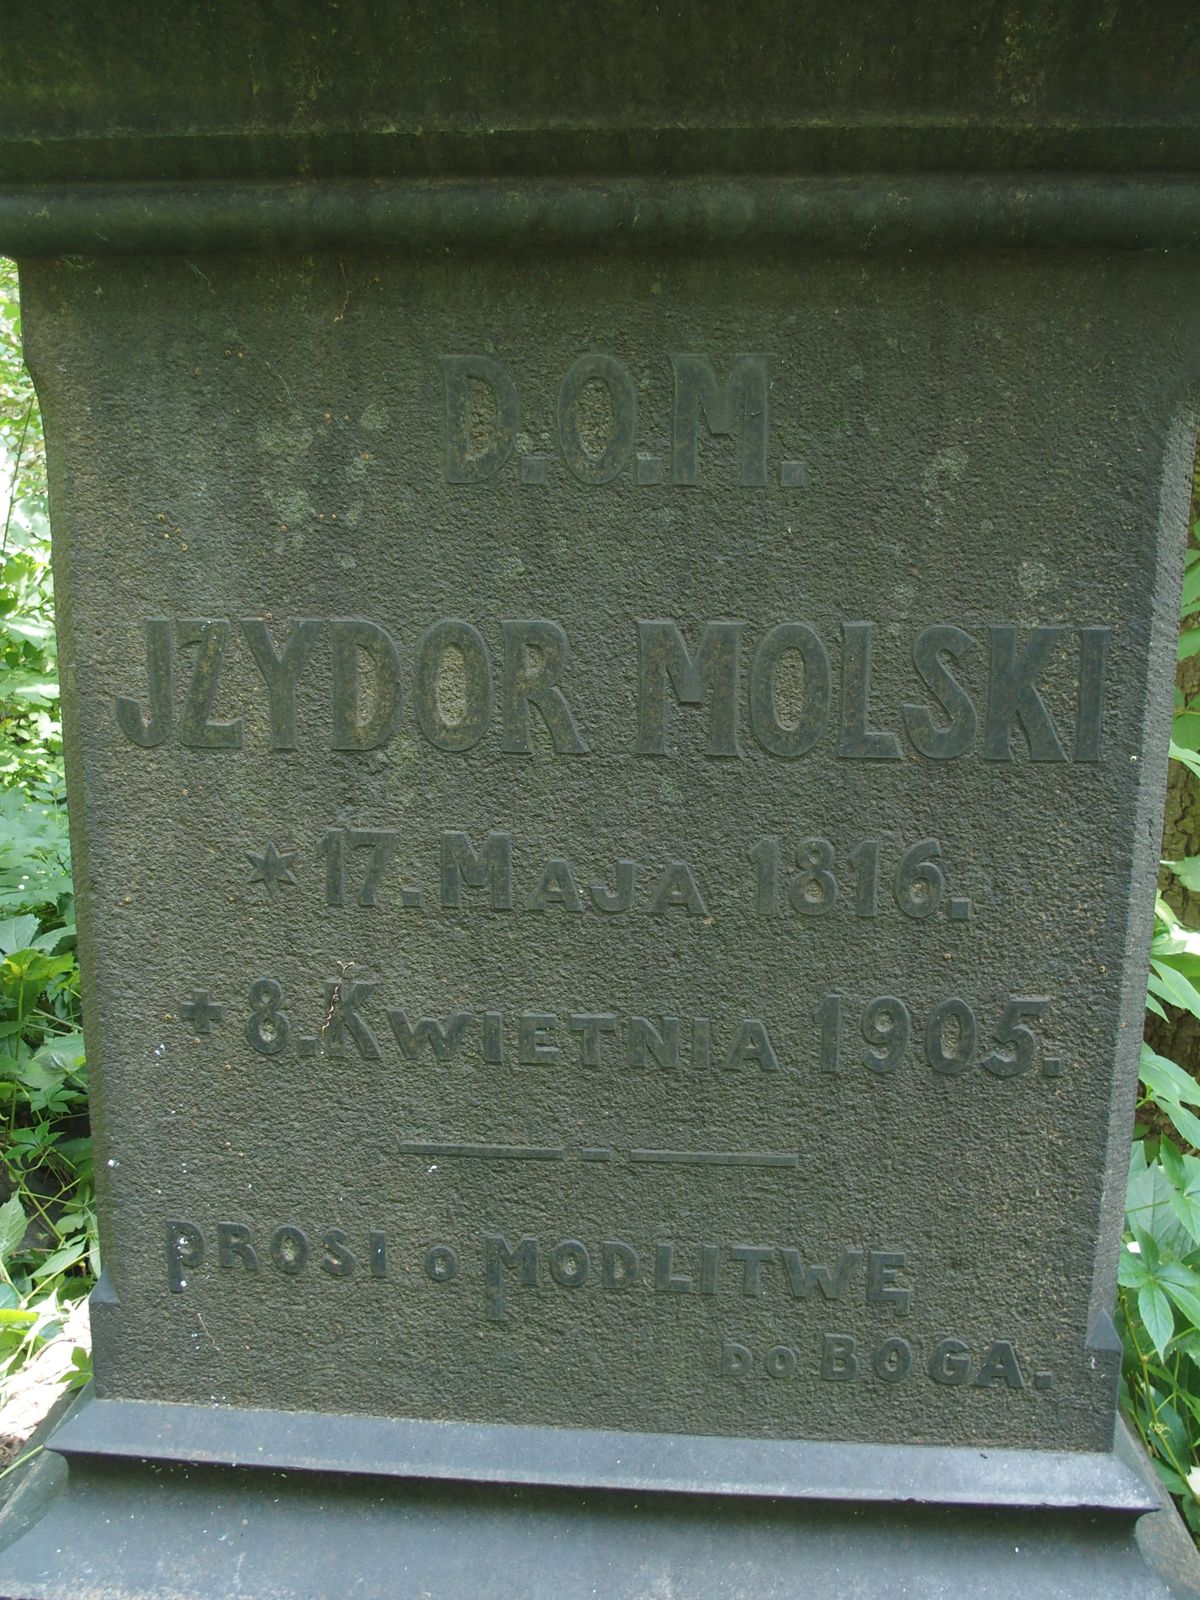 Inscription from the gravestone of Isidor Molsky, Bajkova cemetery in Kiev, as of 2021